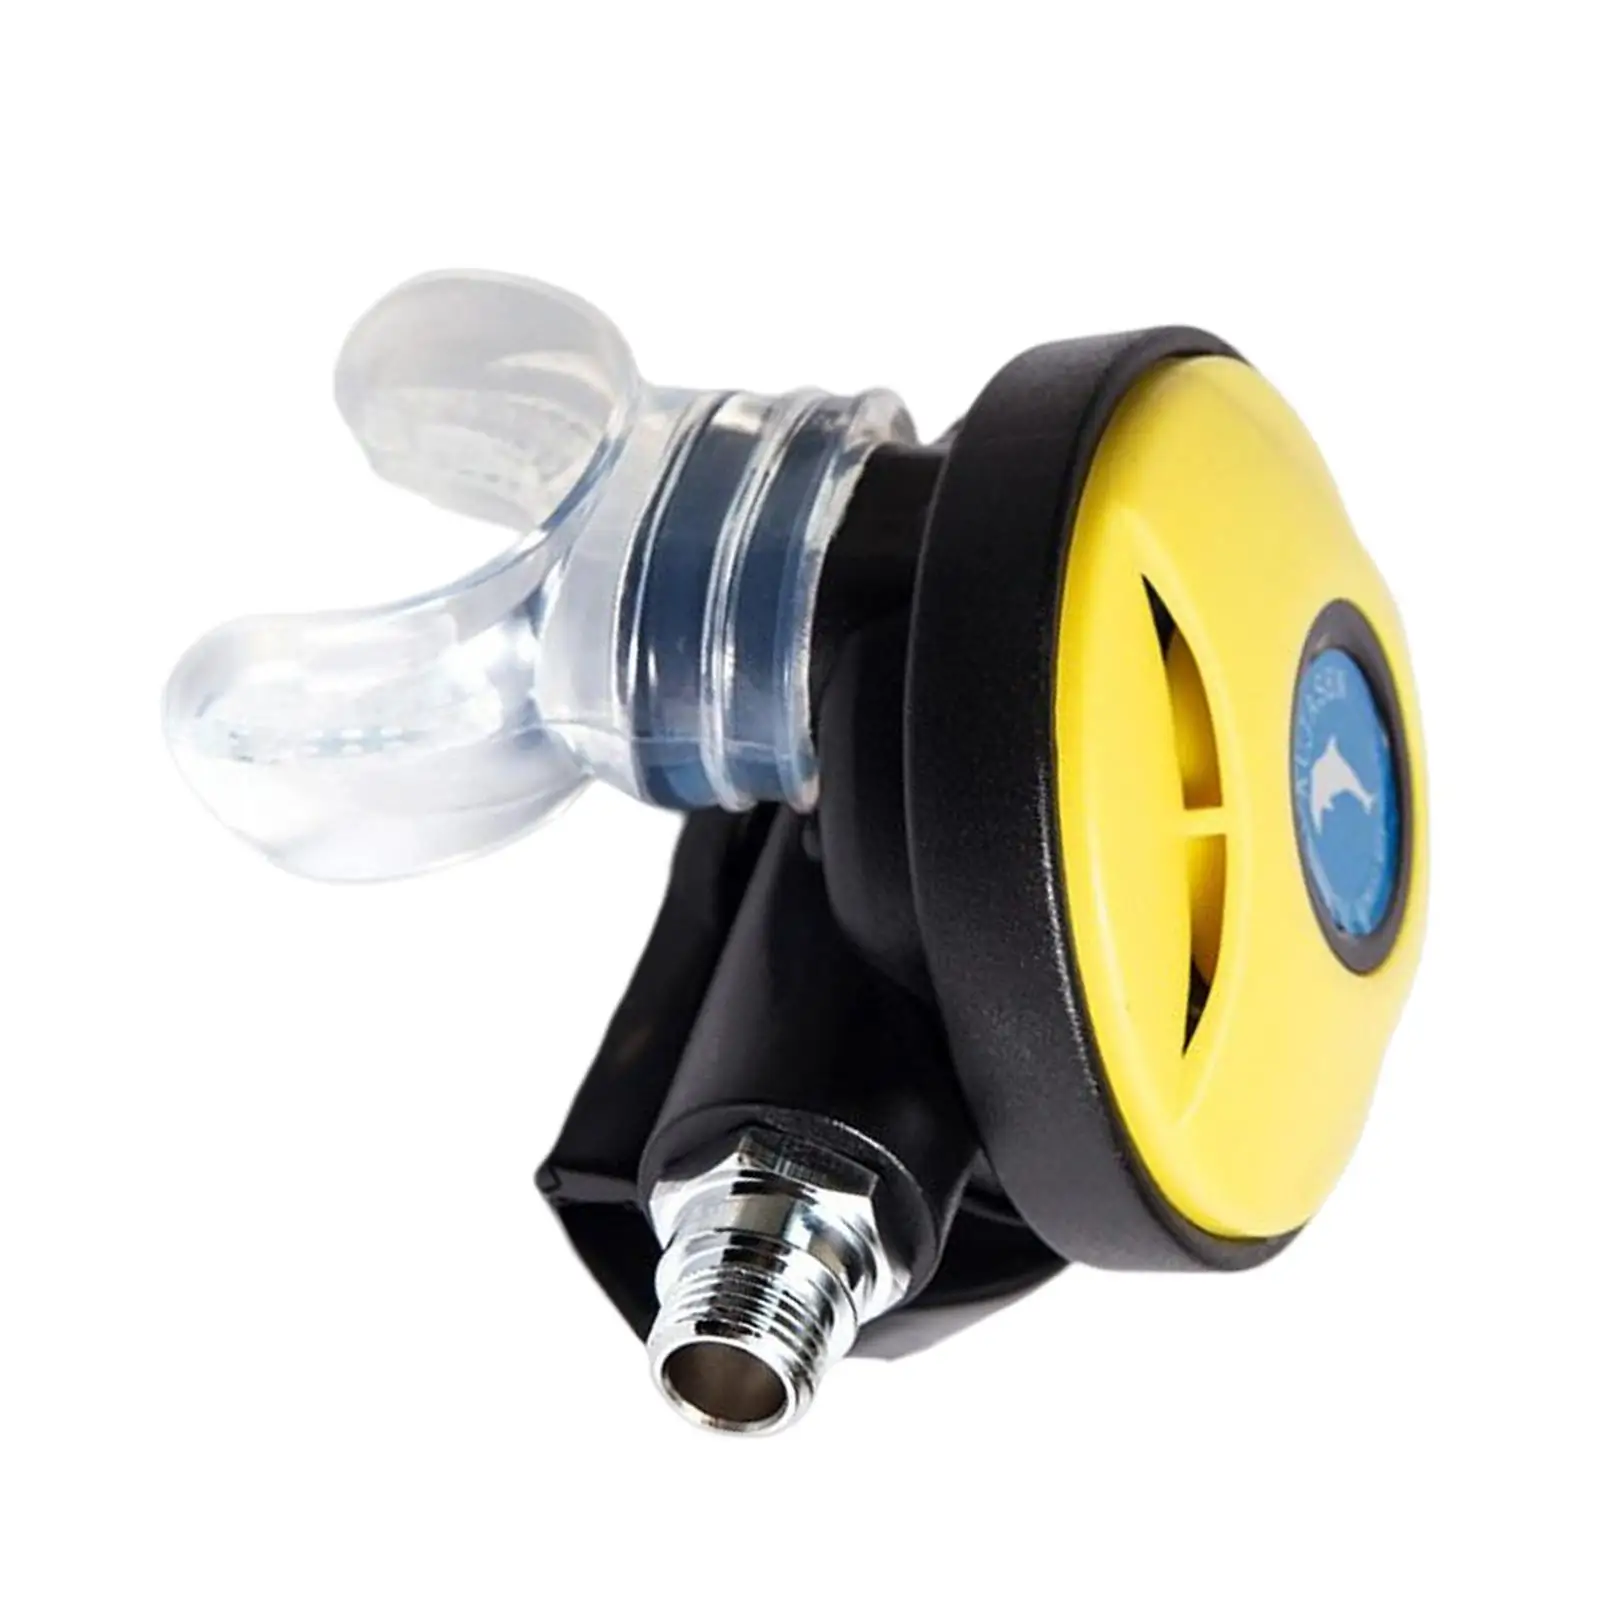 Scuba Diving Regulator Breath Adjuster Water Sports Dive Equipment Gear